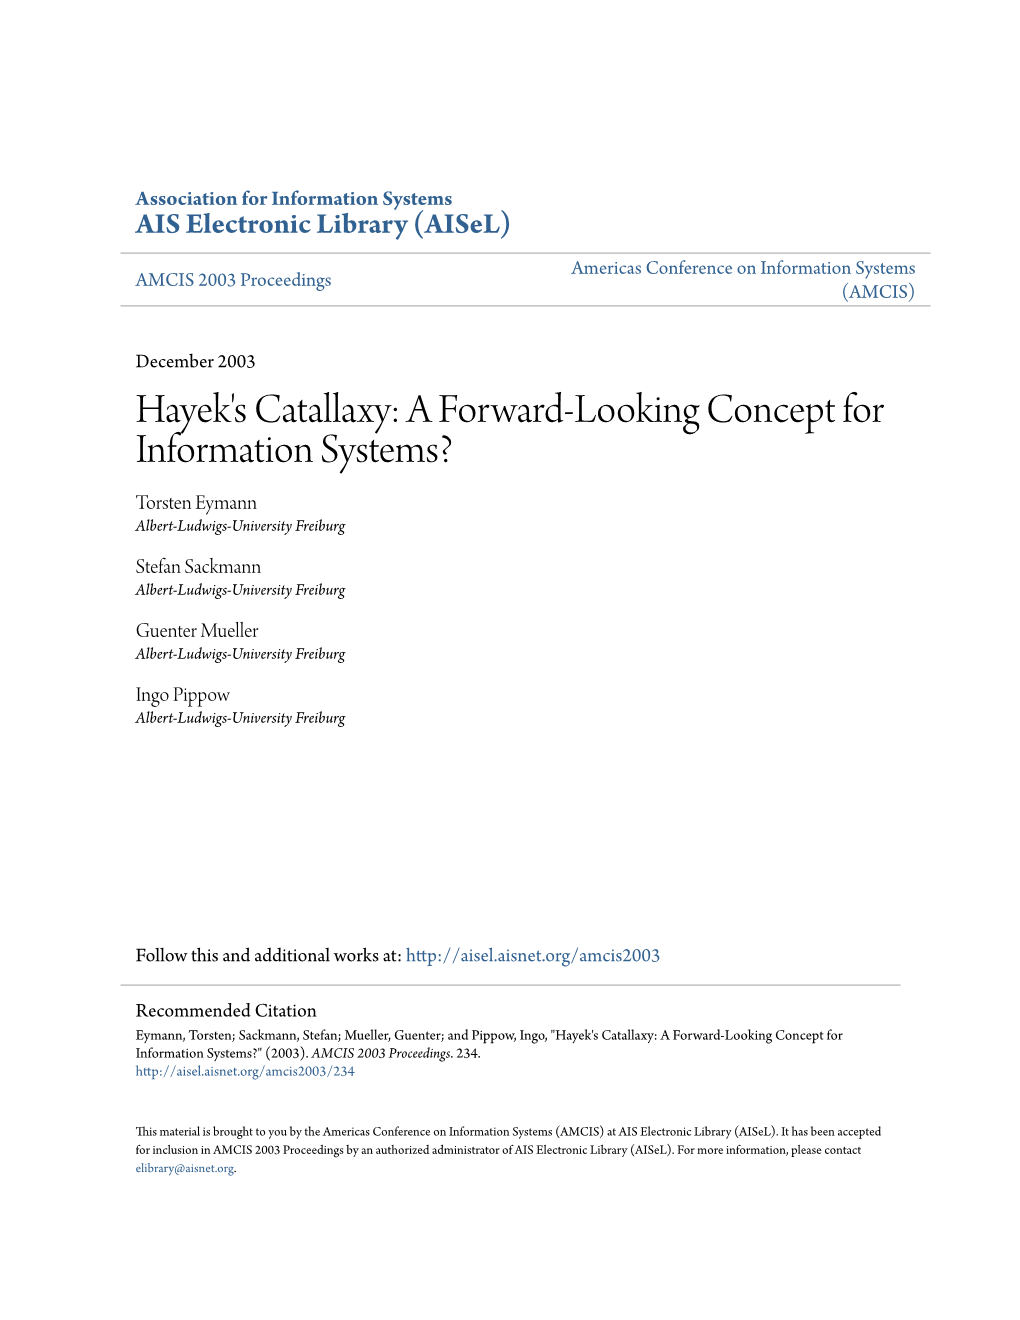 Hayek's Catallaxy: a Forward-Looking Concept for Information Systems? Torsten Eymann Albert-Ludwigs-University Freiburg